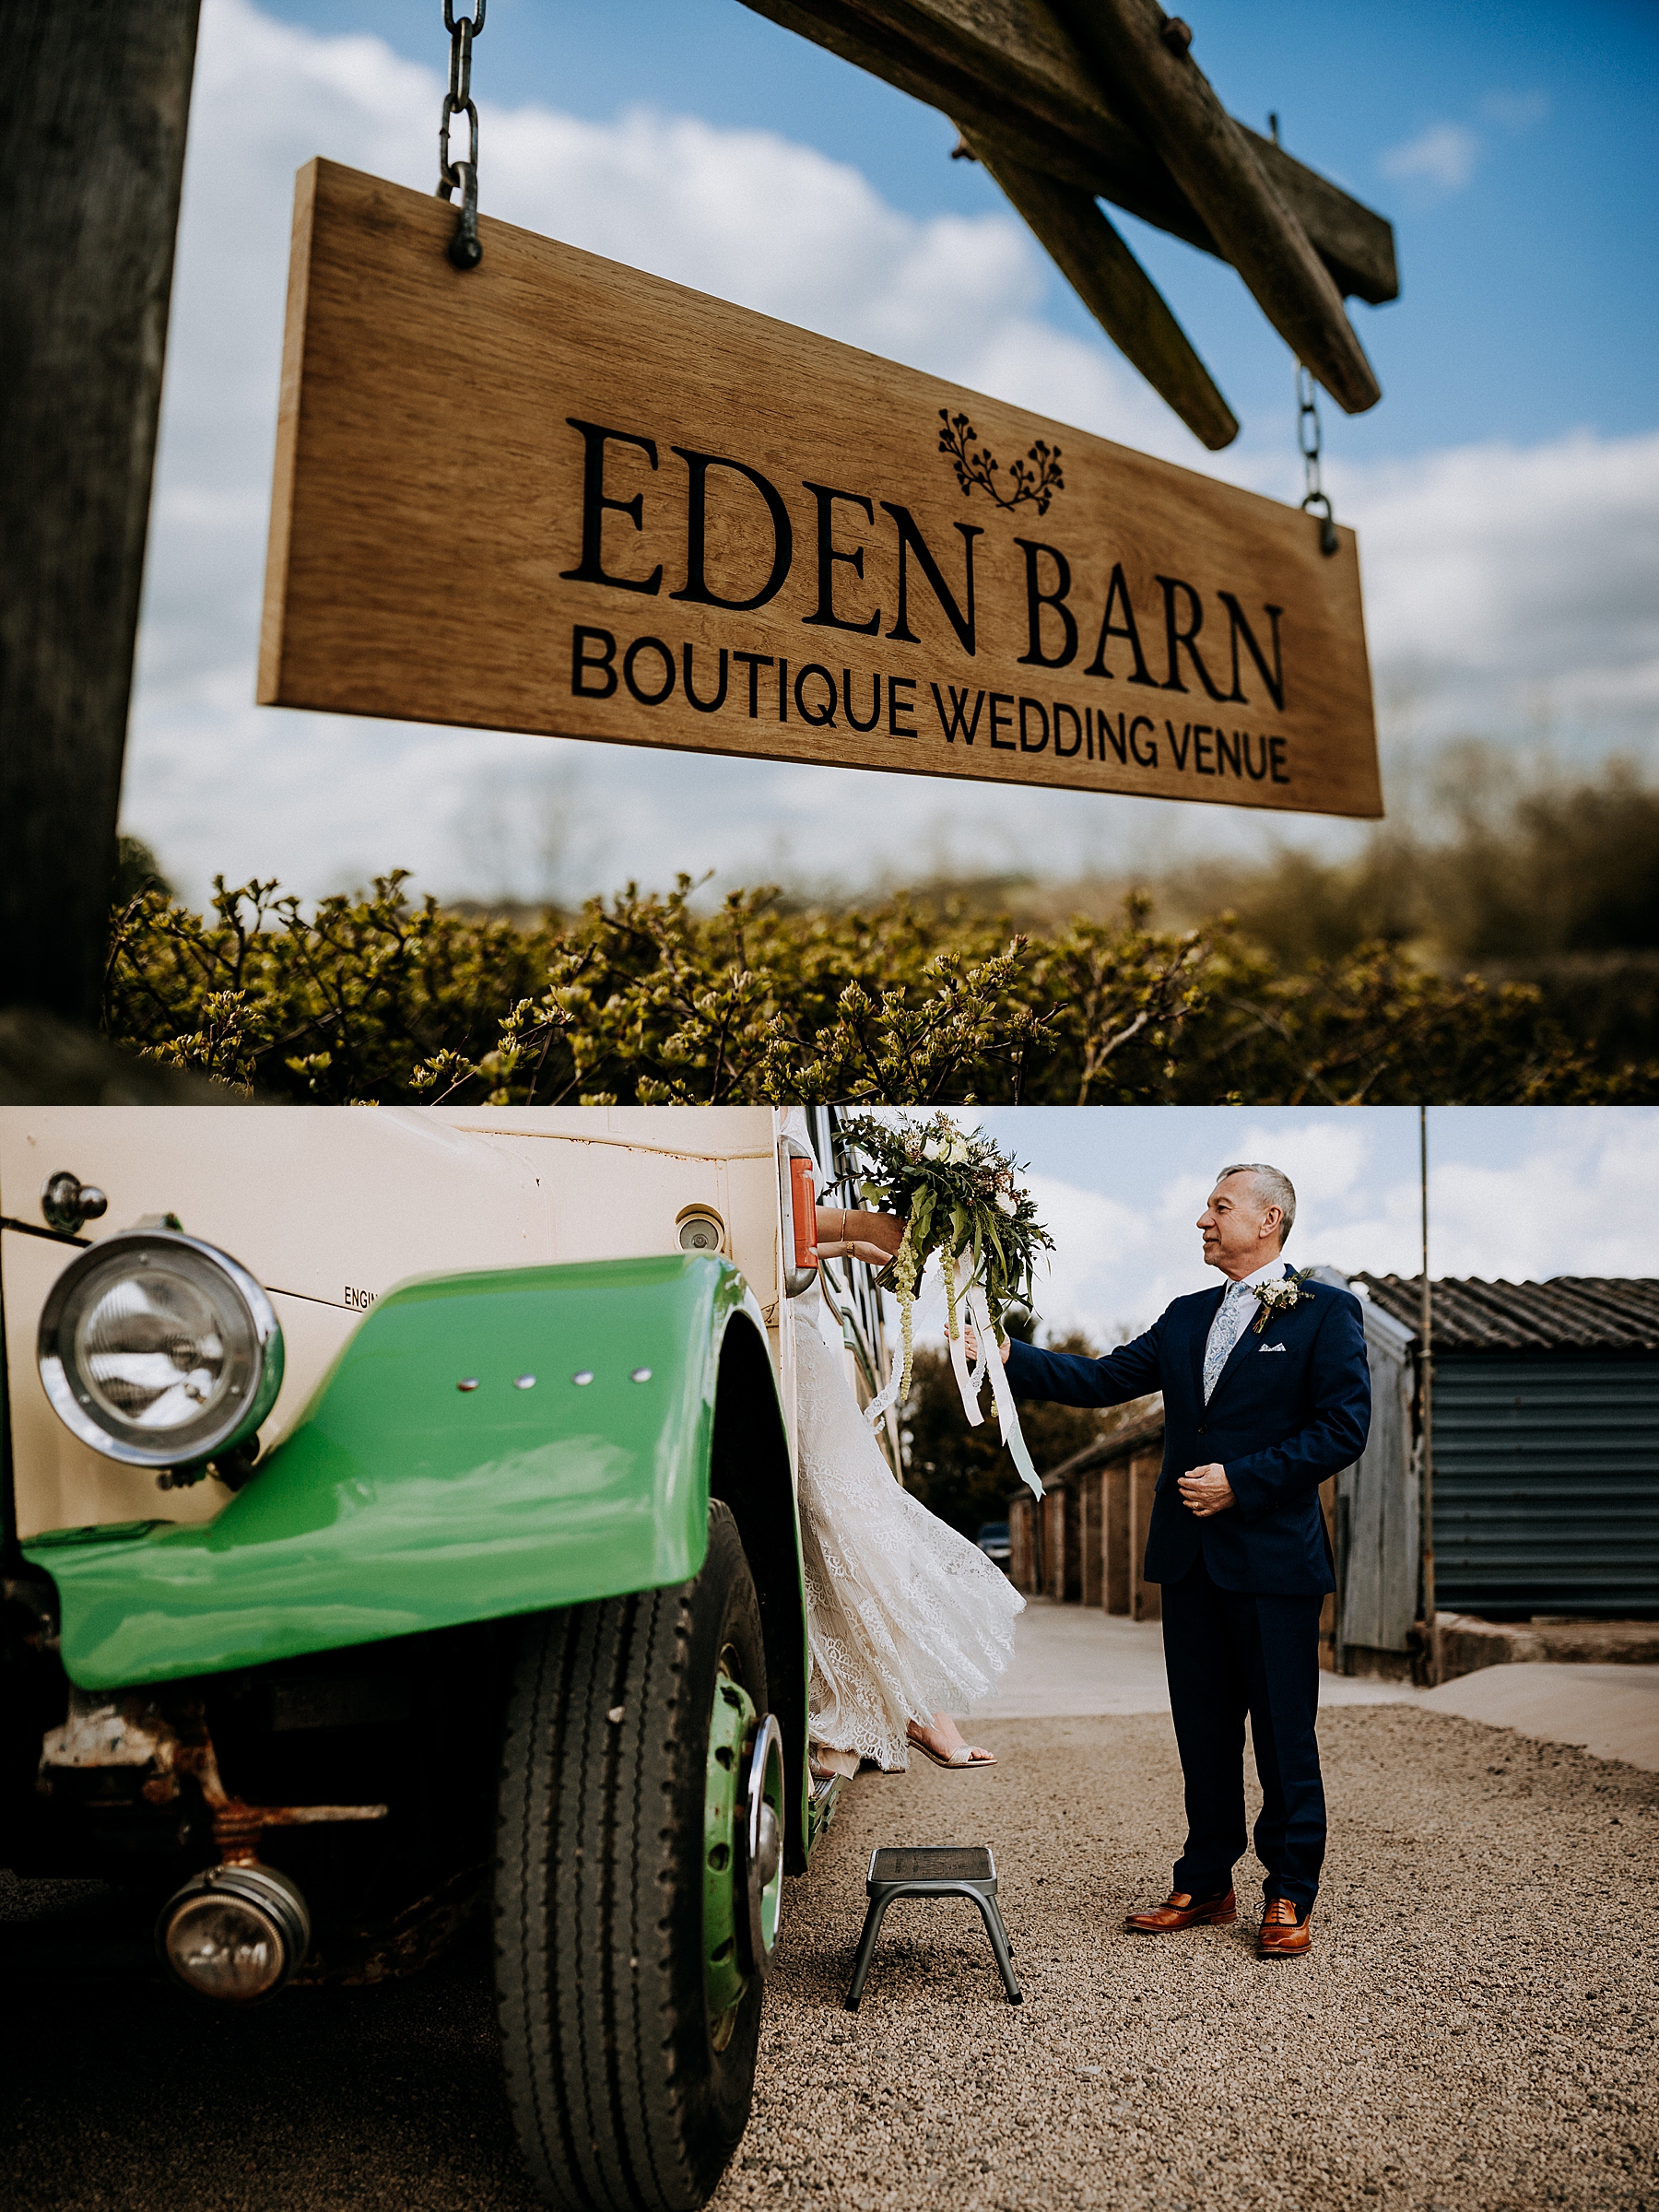 Eden Barn Wedding Venue - Peter Hugo Photography